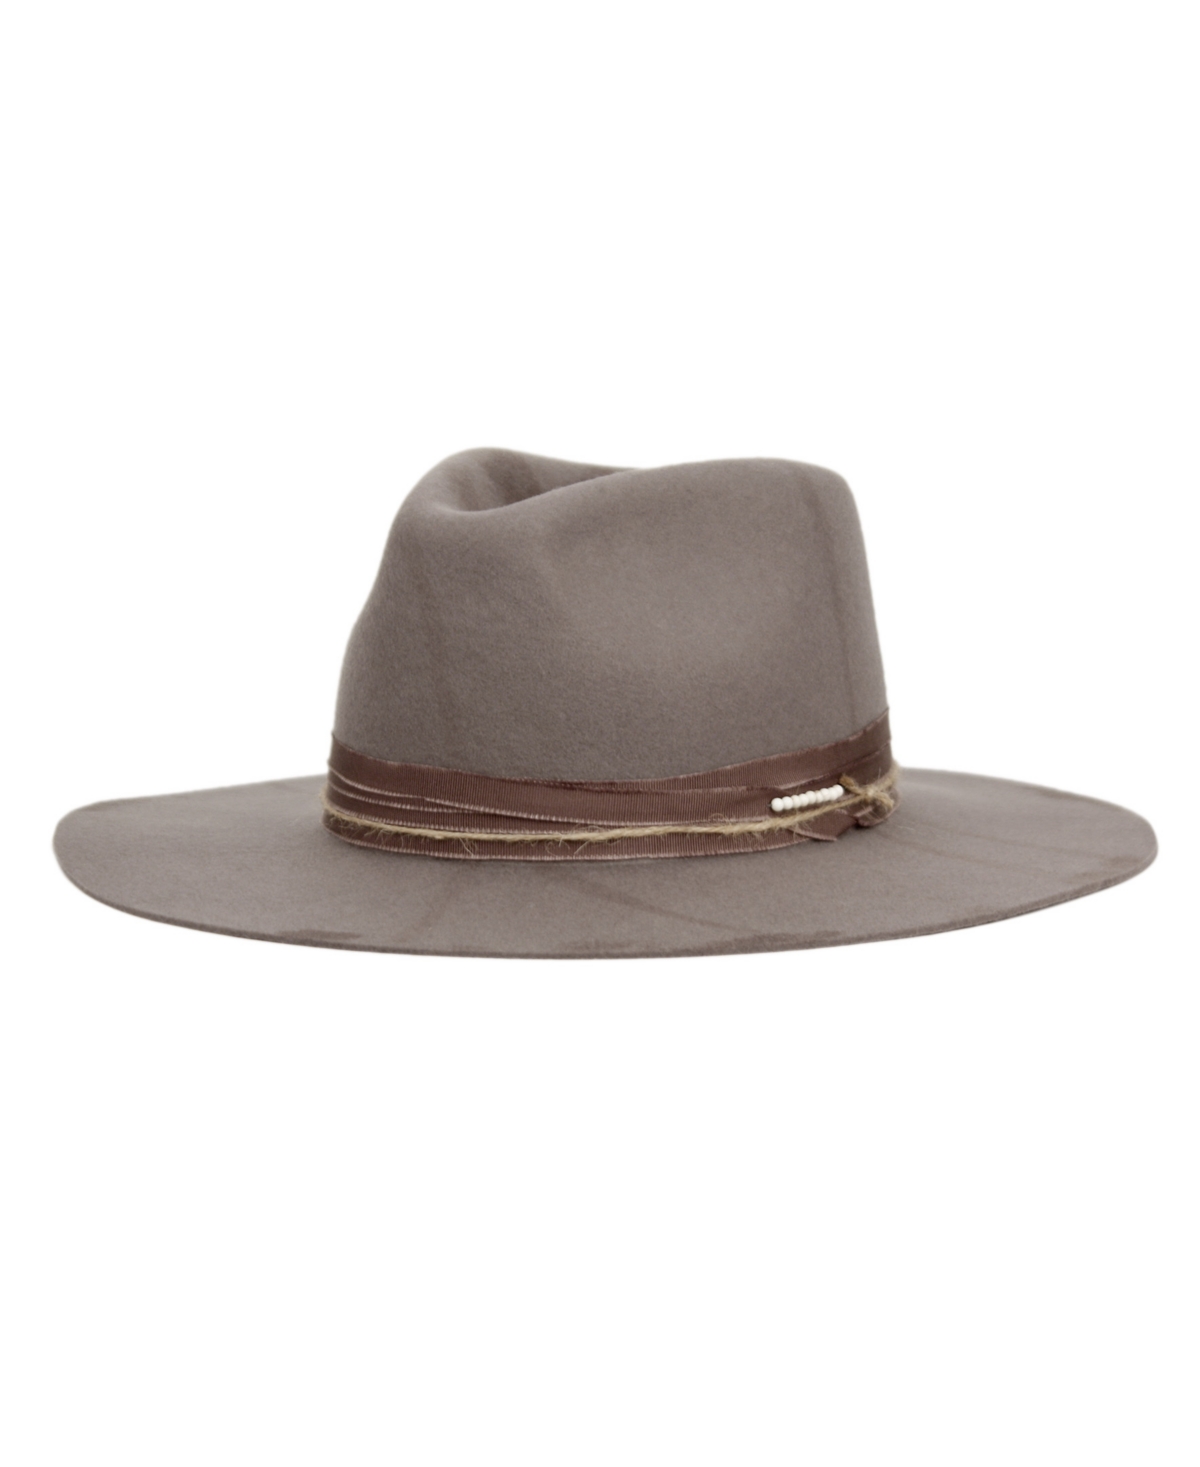 Vintage-Like Felt Fedora Ranch Hat - Gray